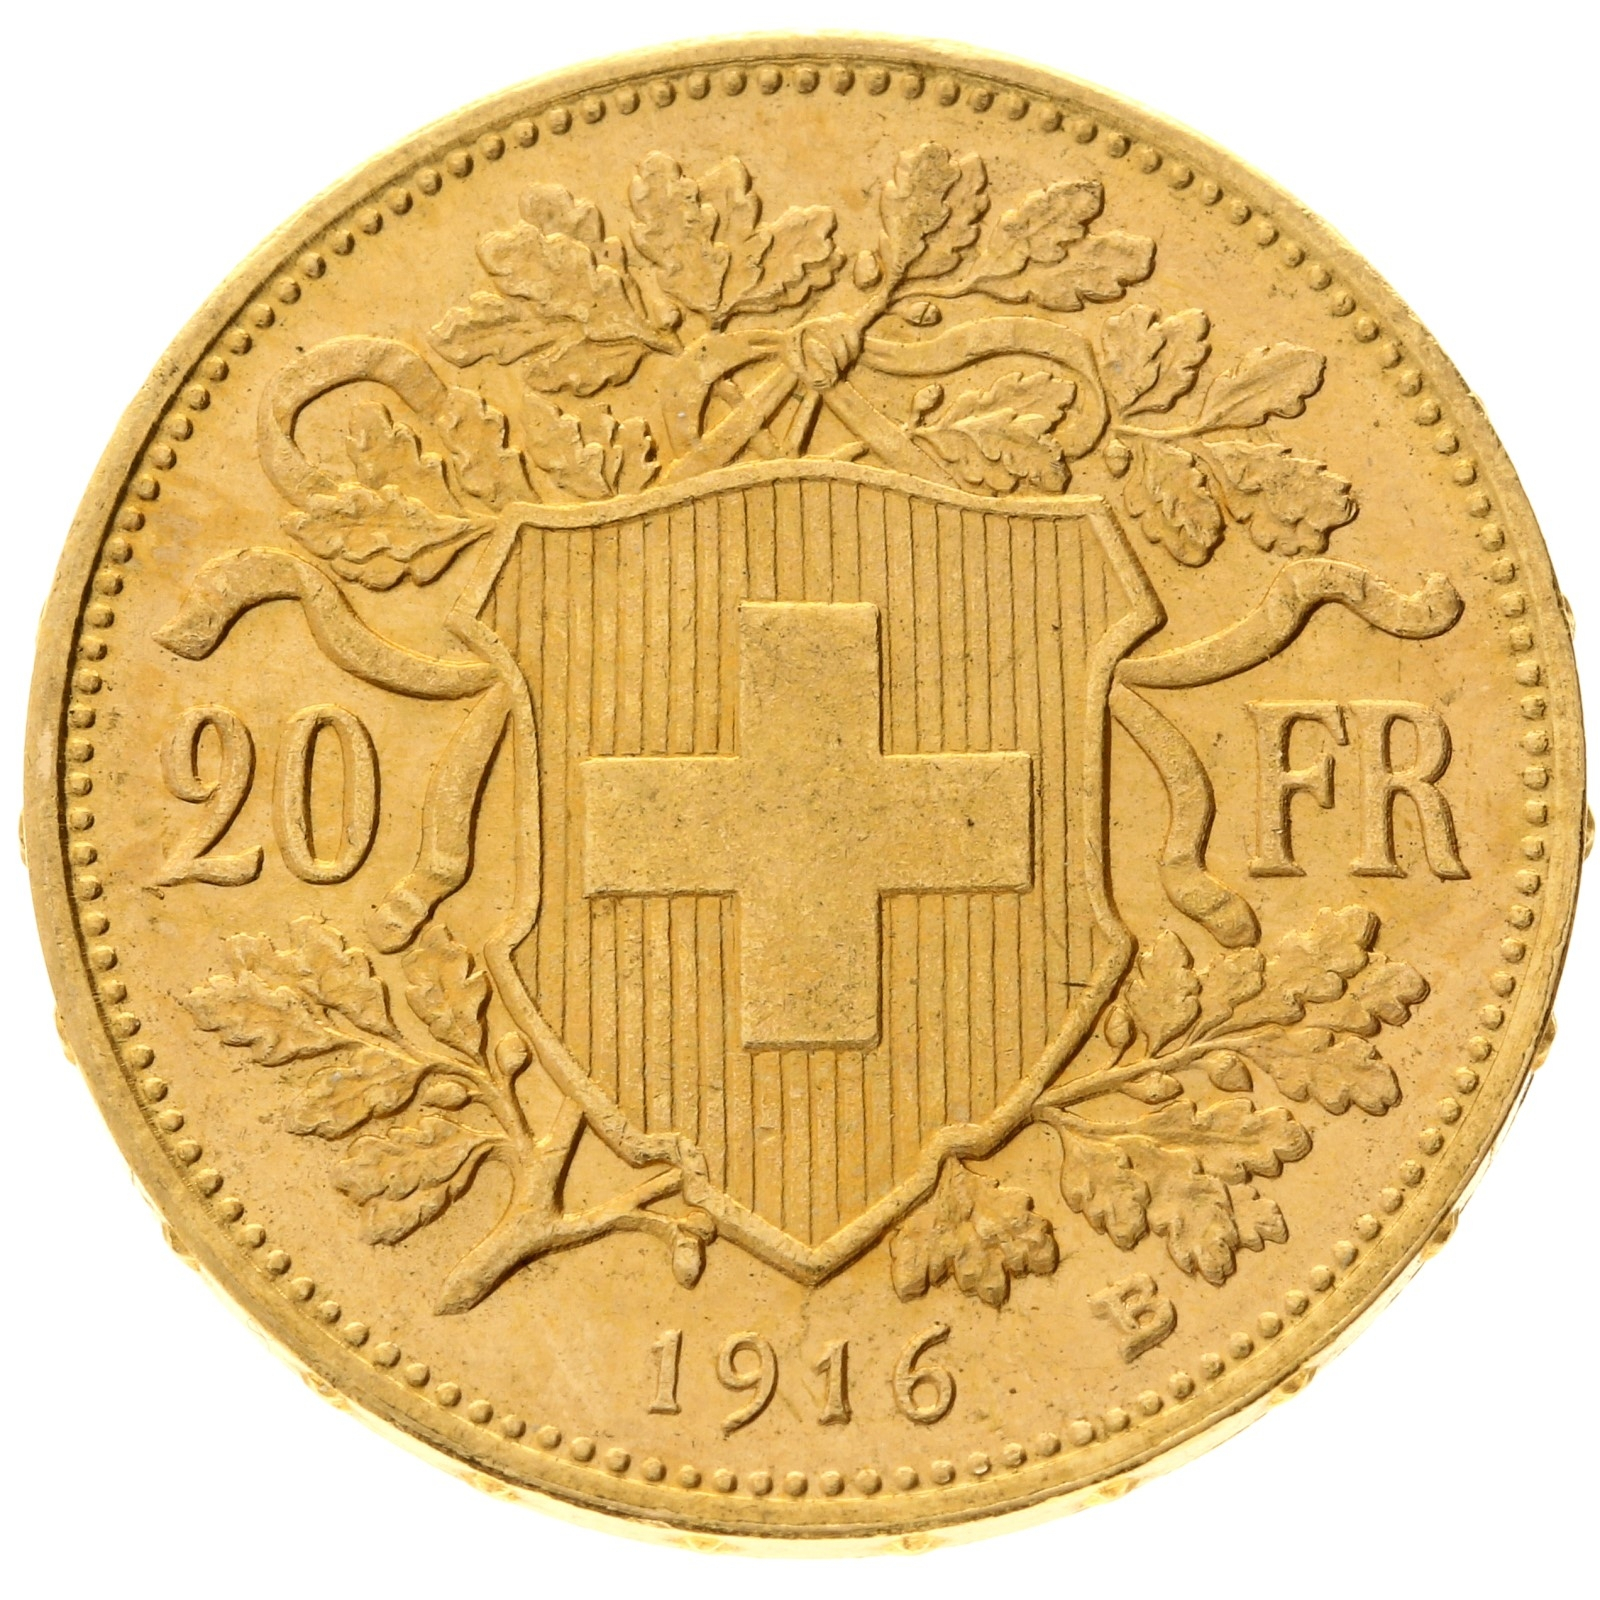 Switzerland - 20 francs - 1916 - Vreneli 